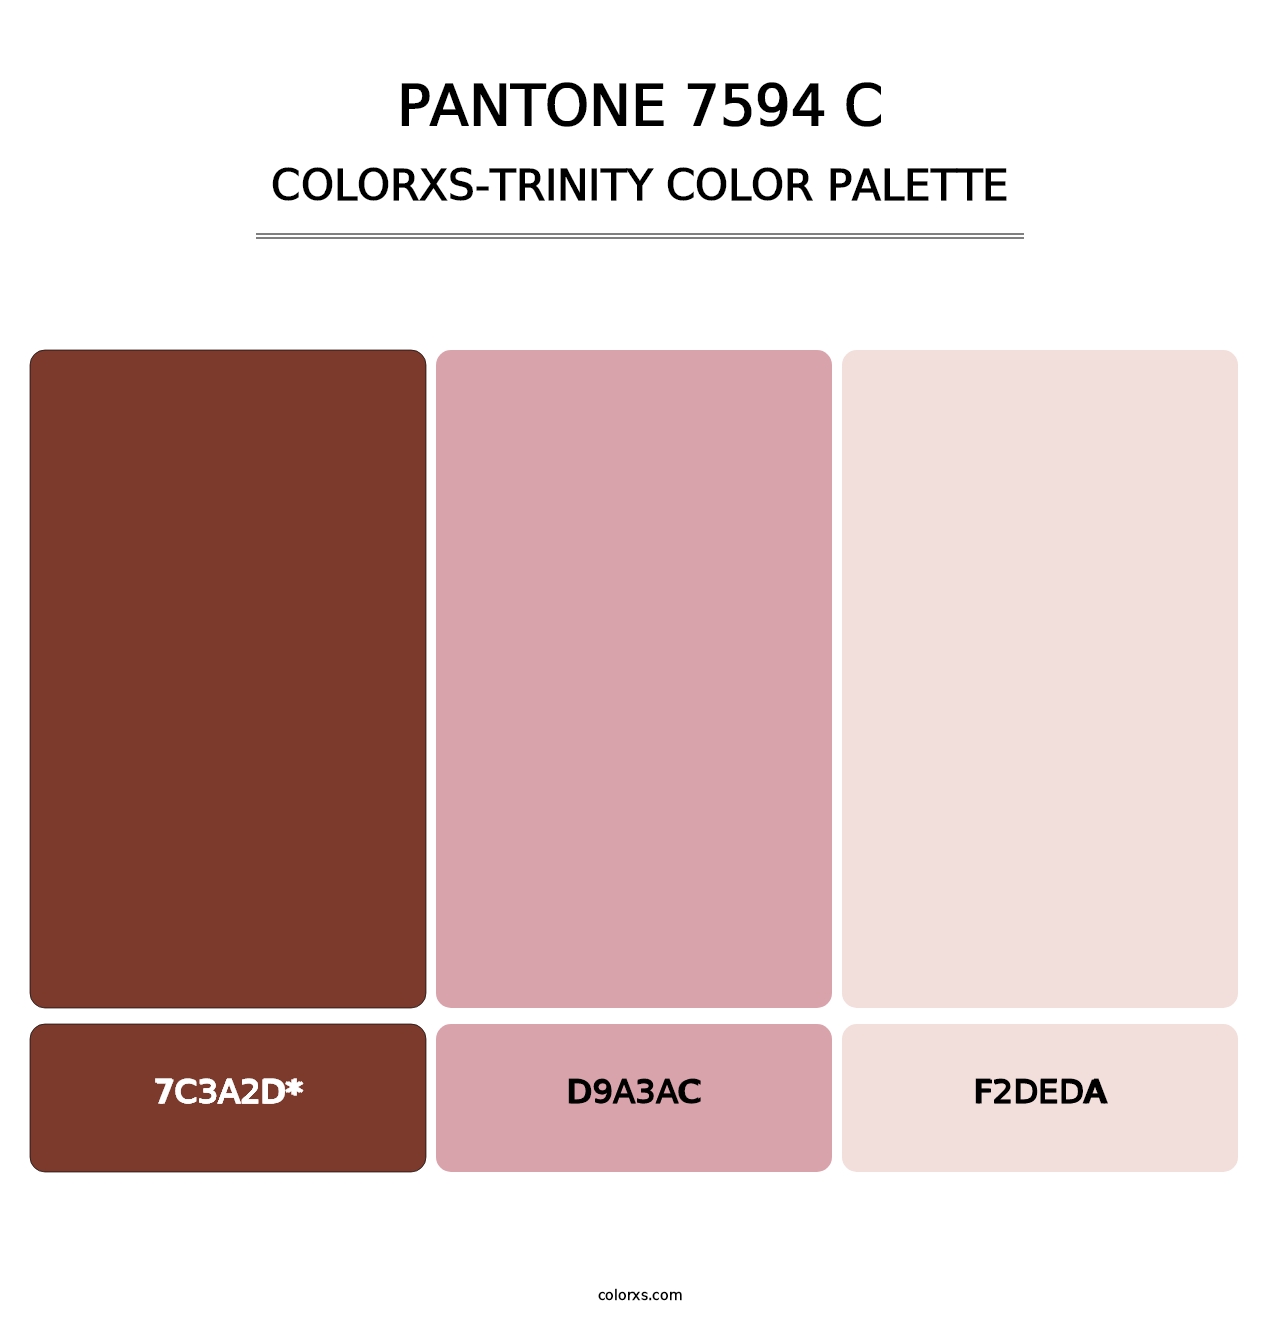 PANTONE 7594 C - Colorxs Trinity Palette